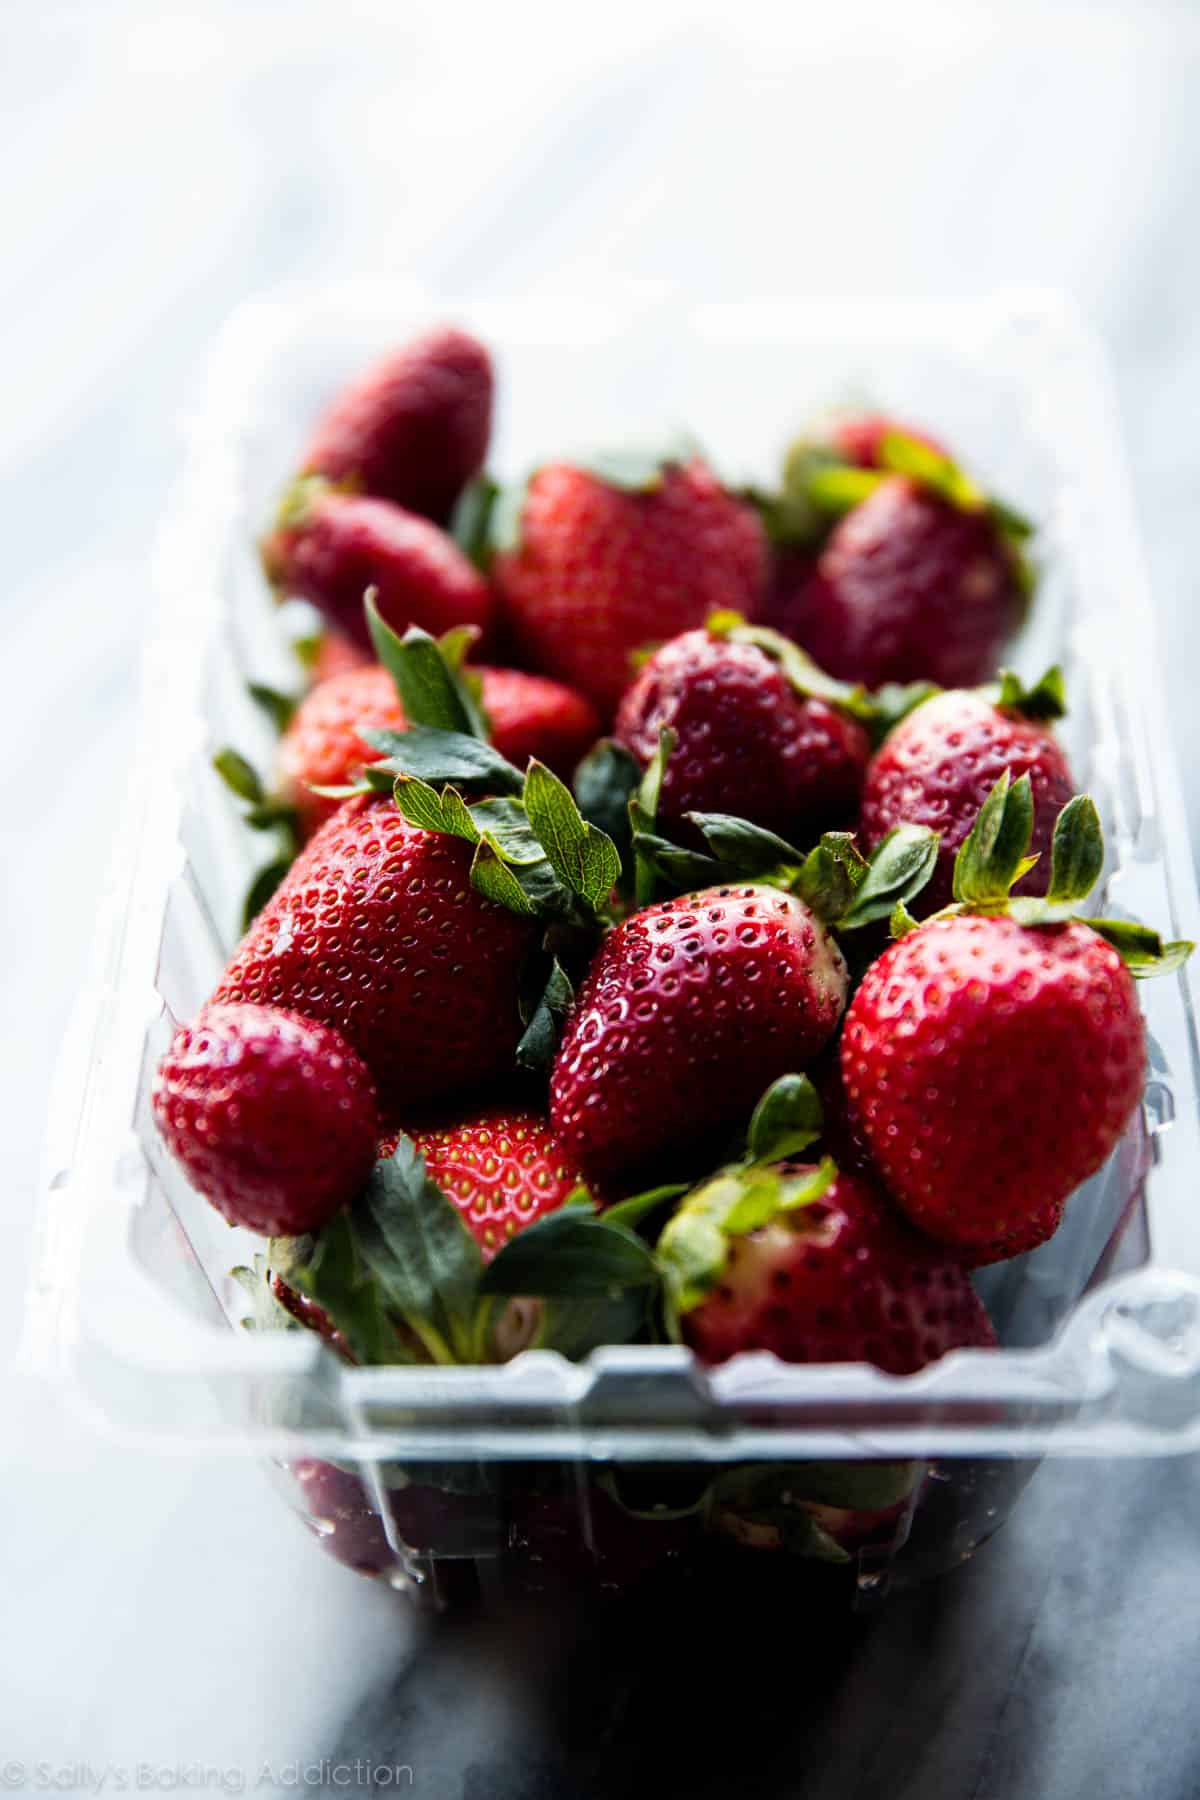 carton of strawberries